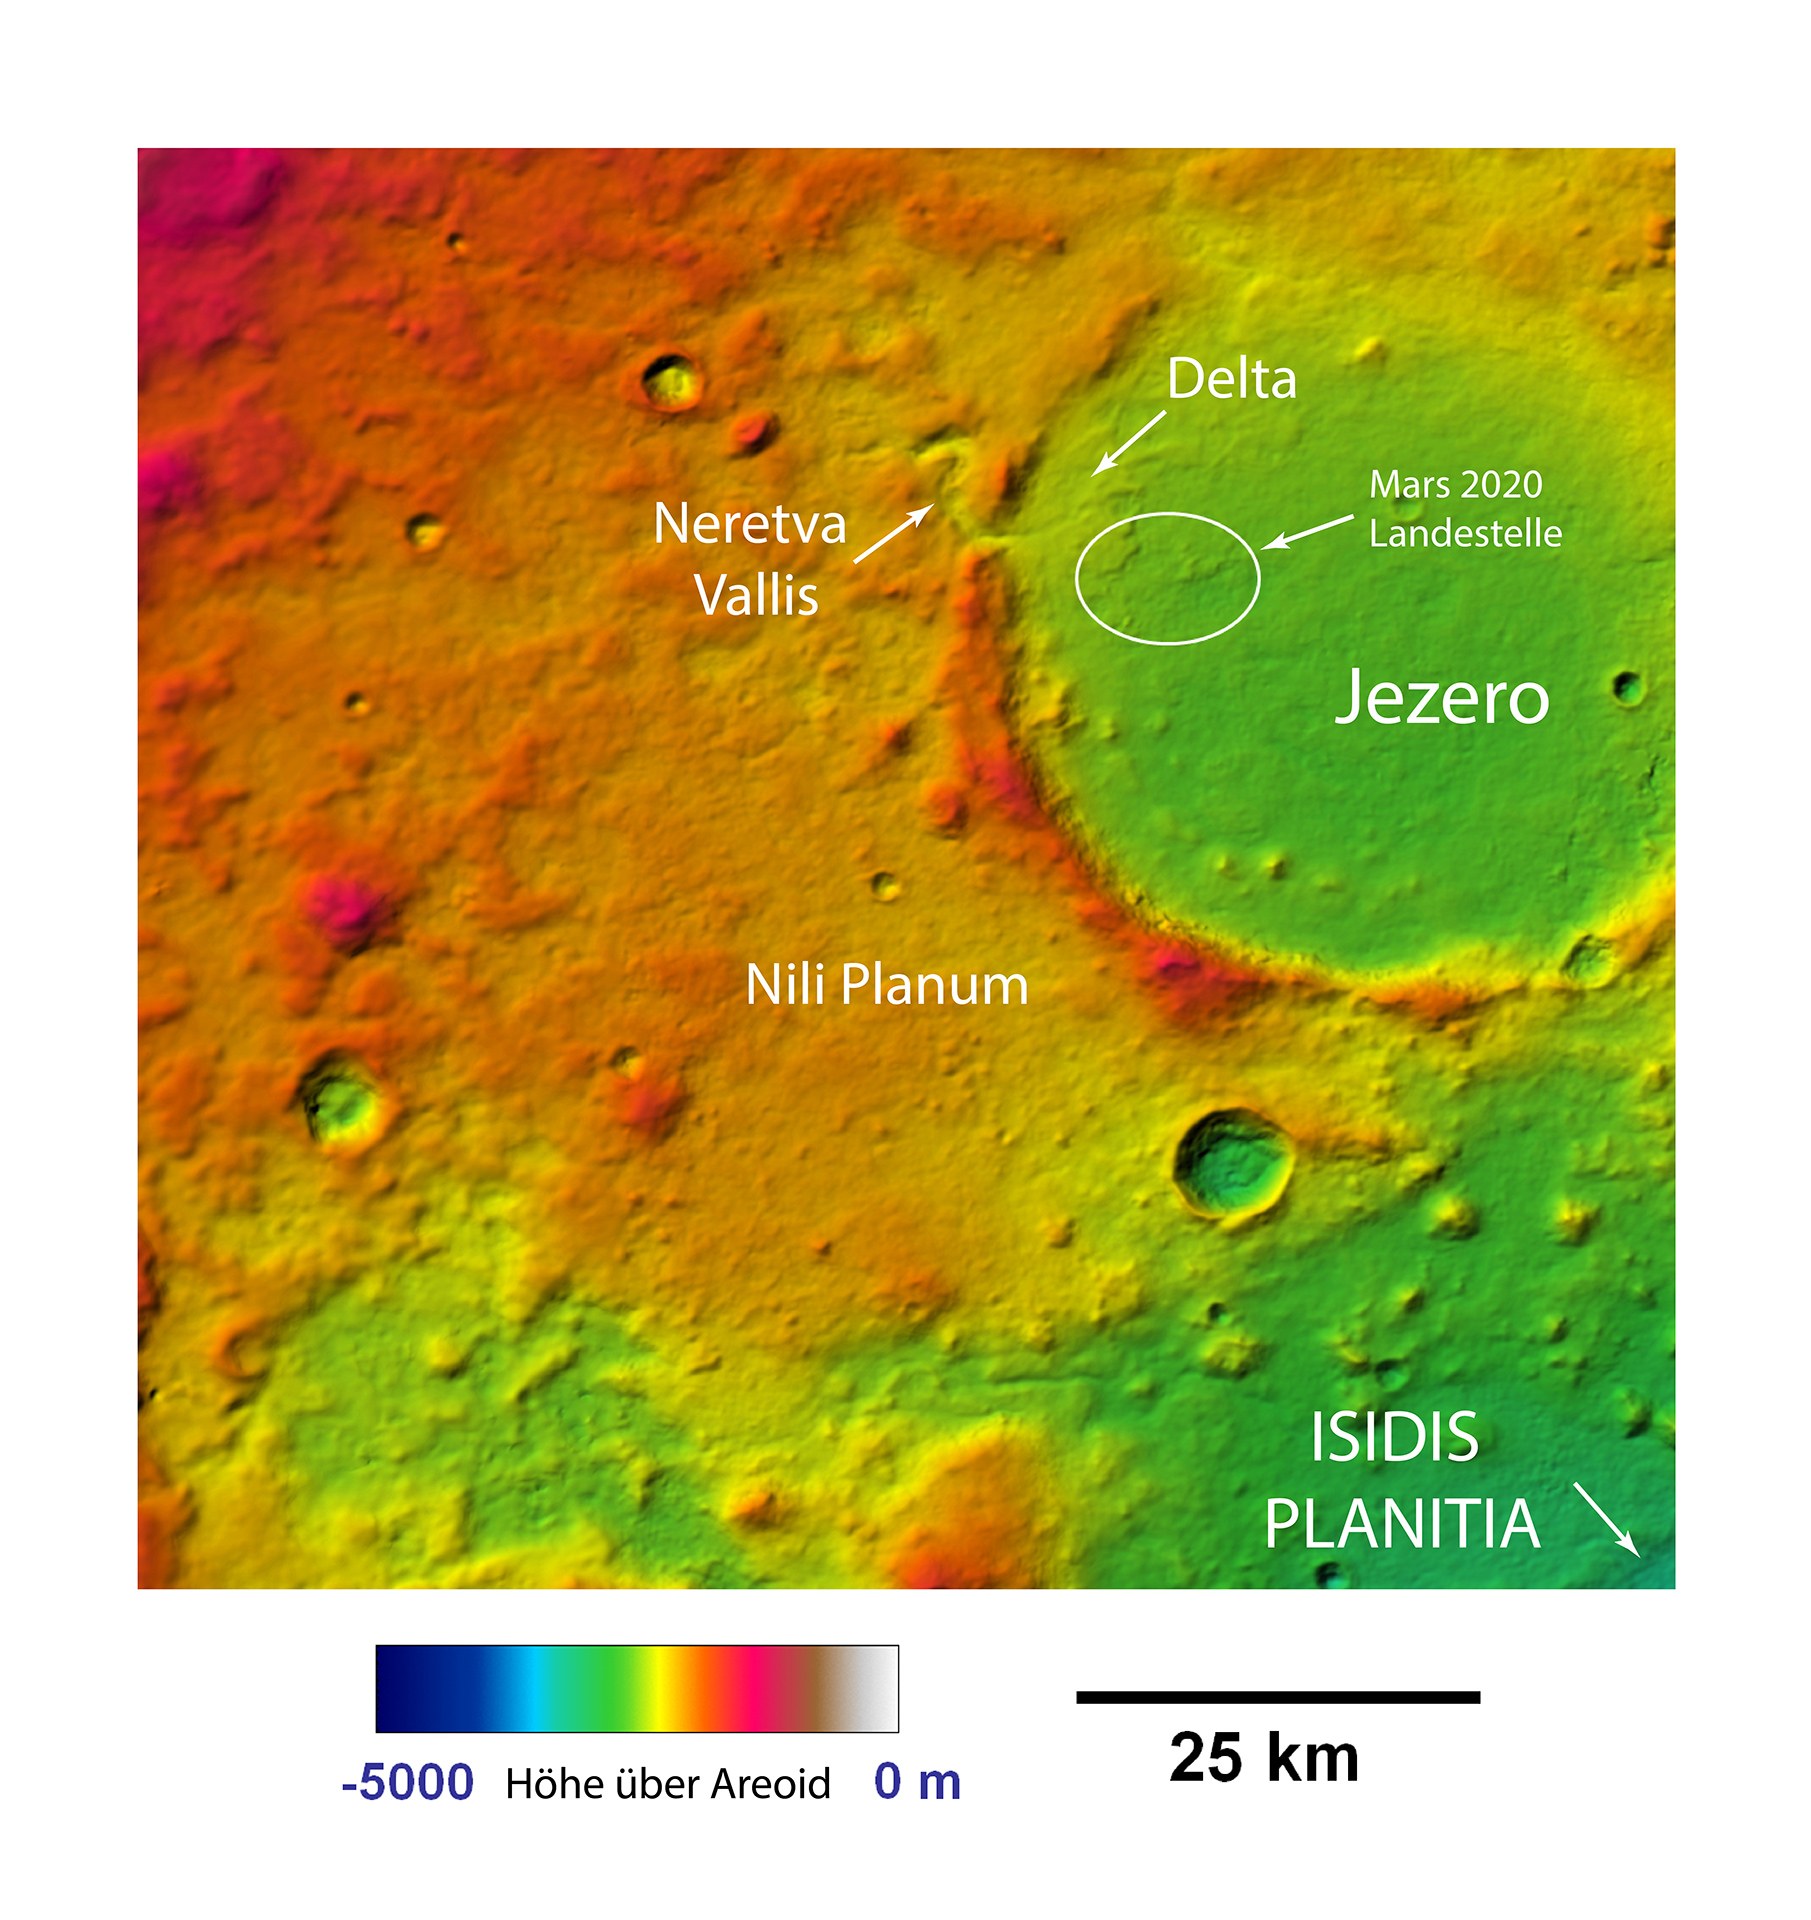 The Mars 2020 landing site in the HRSC terrain model